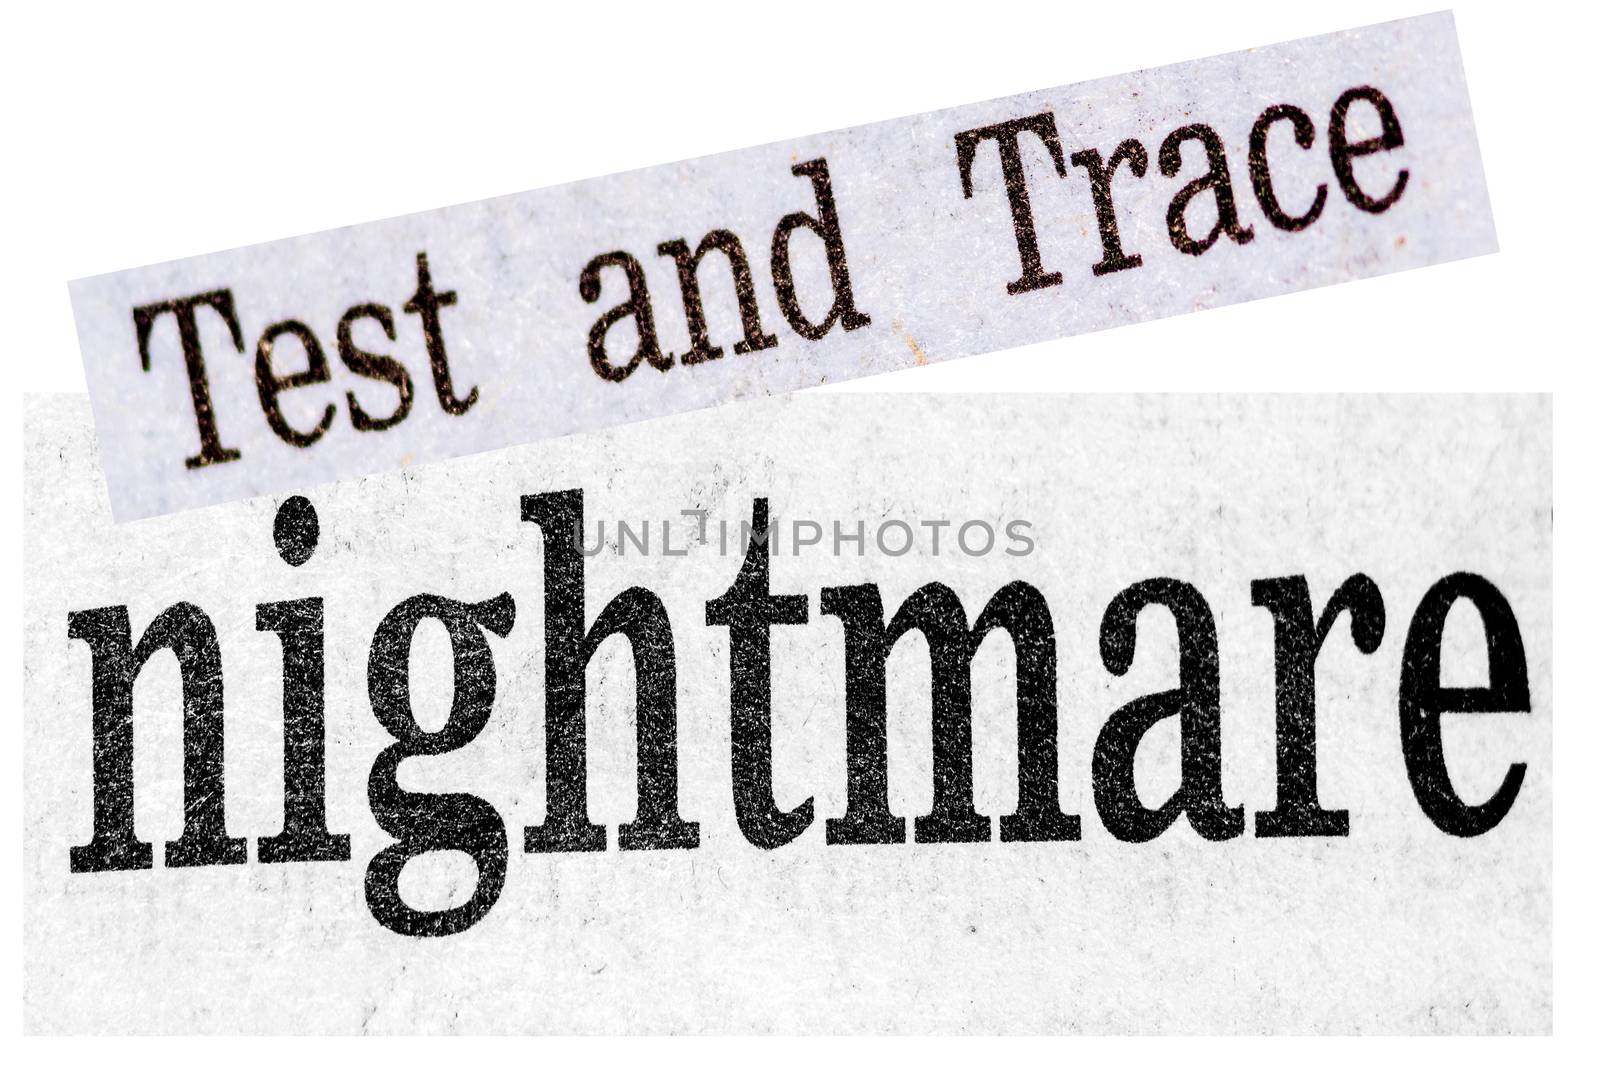 Distressed newspaper headline test and trace nightmare by paddythegolfer